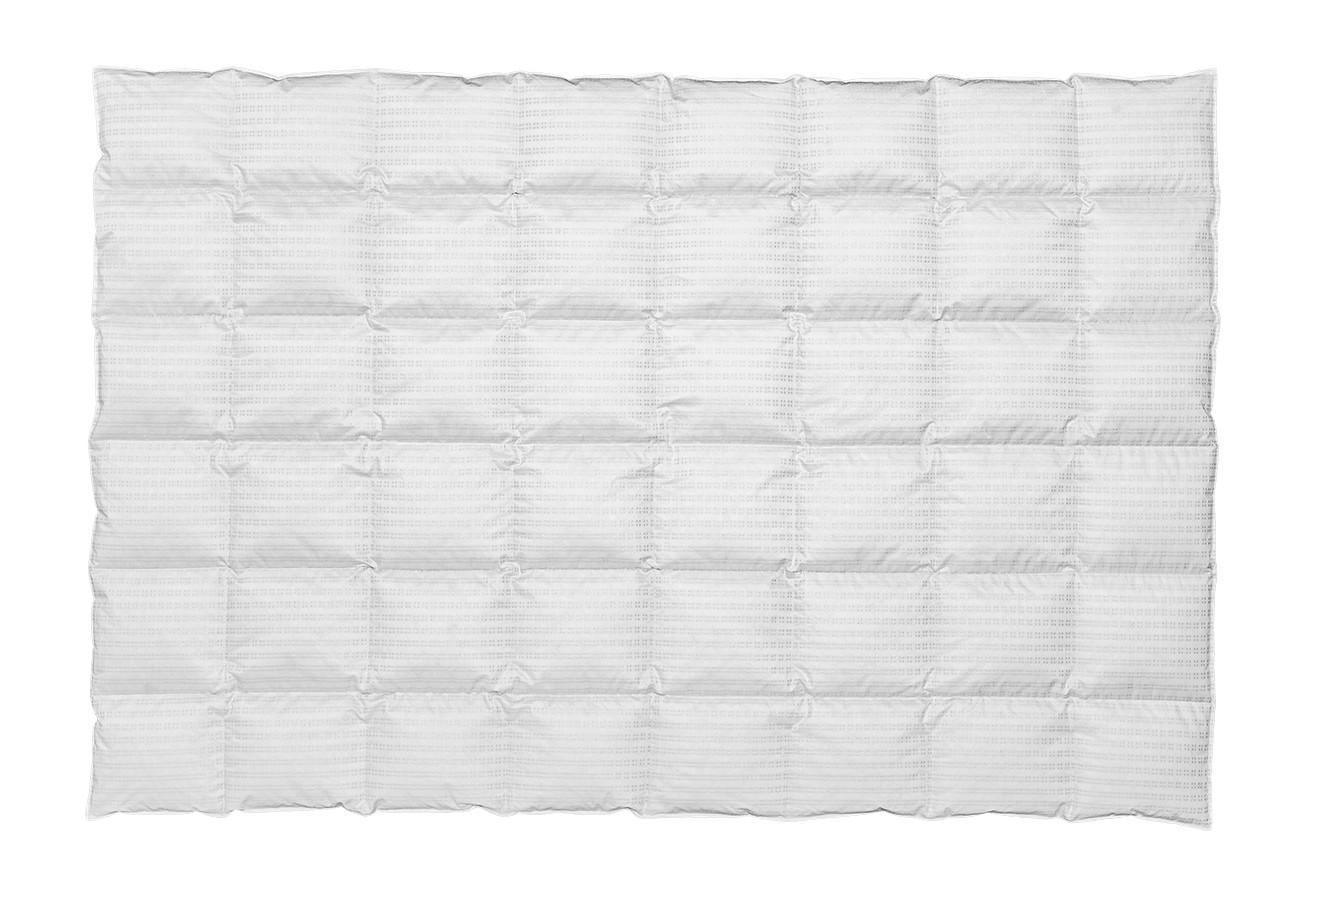 DAUNENDECKE  Polar Platin  135/200 cm   - Silberfarben/Weiß, Basics, Textil (135/200cm) - Centa-Star